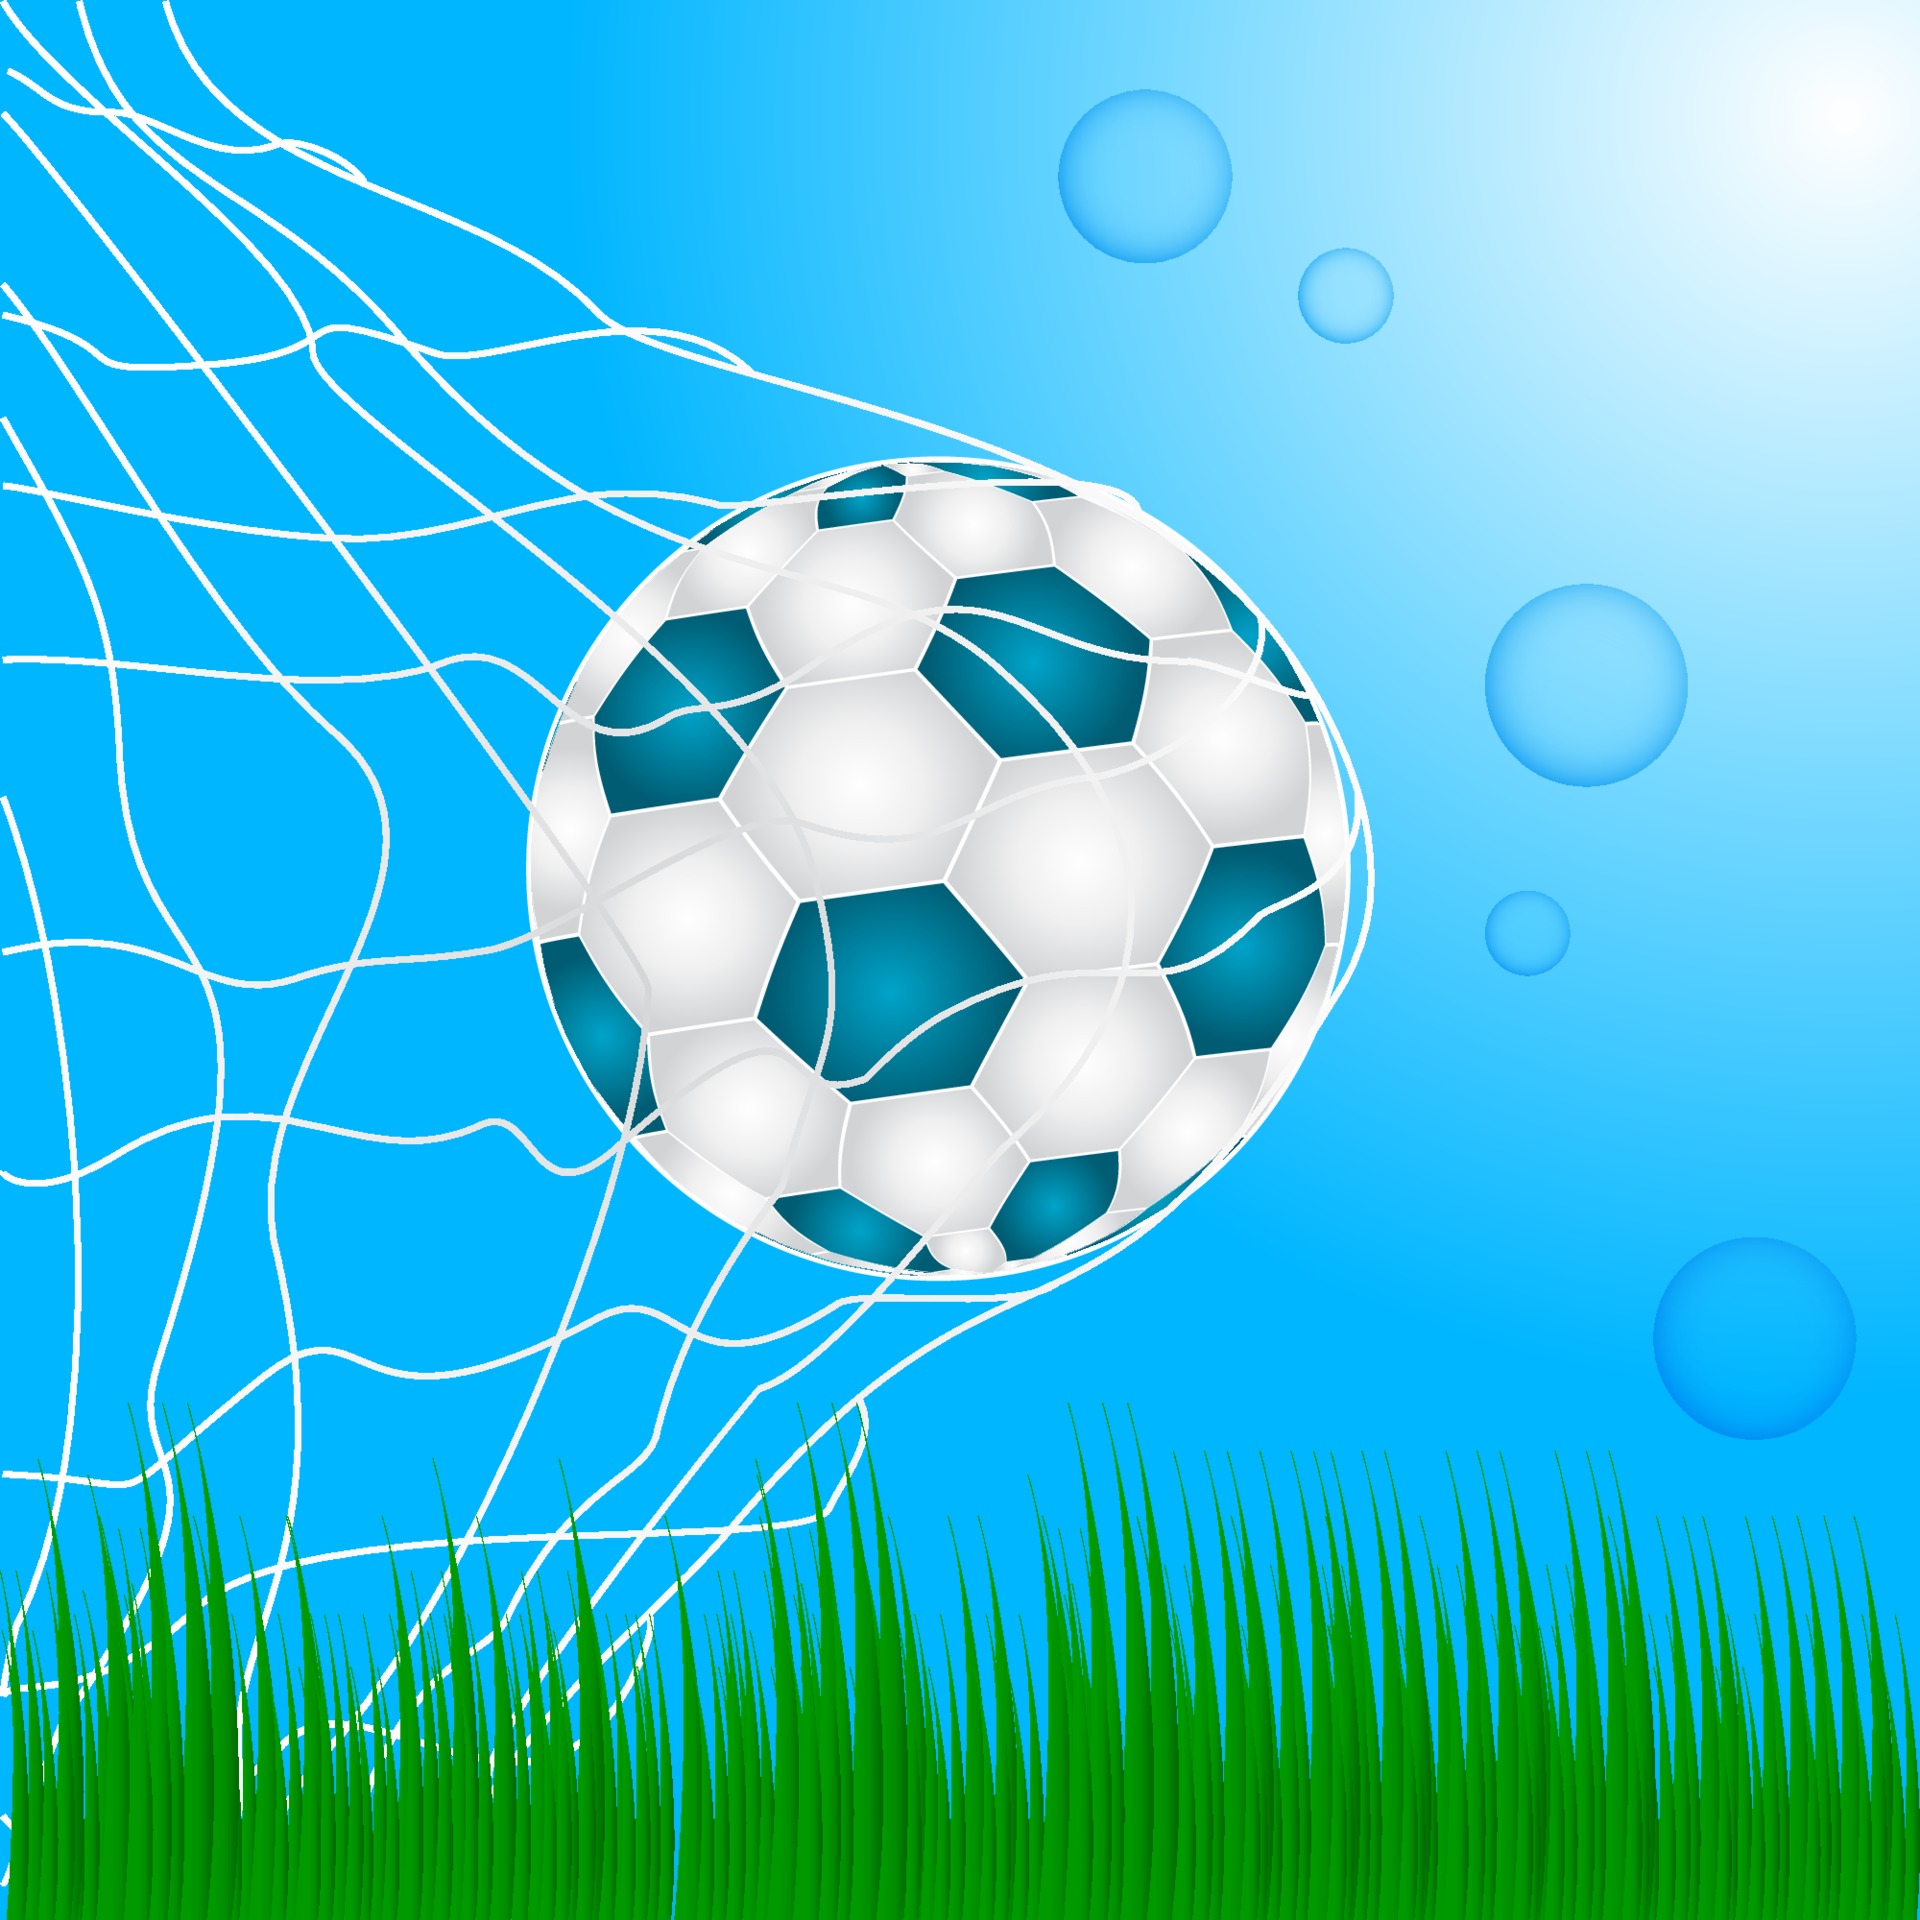 football-design-for-background-advertising-vector